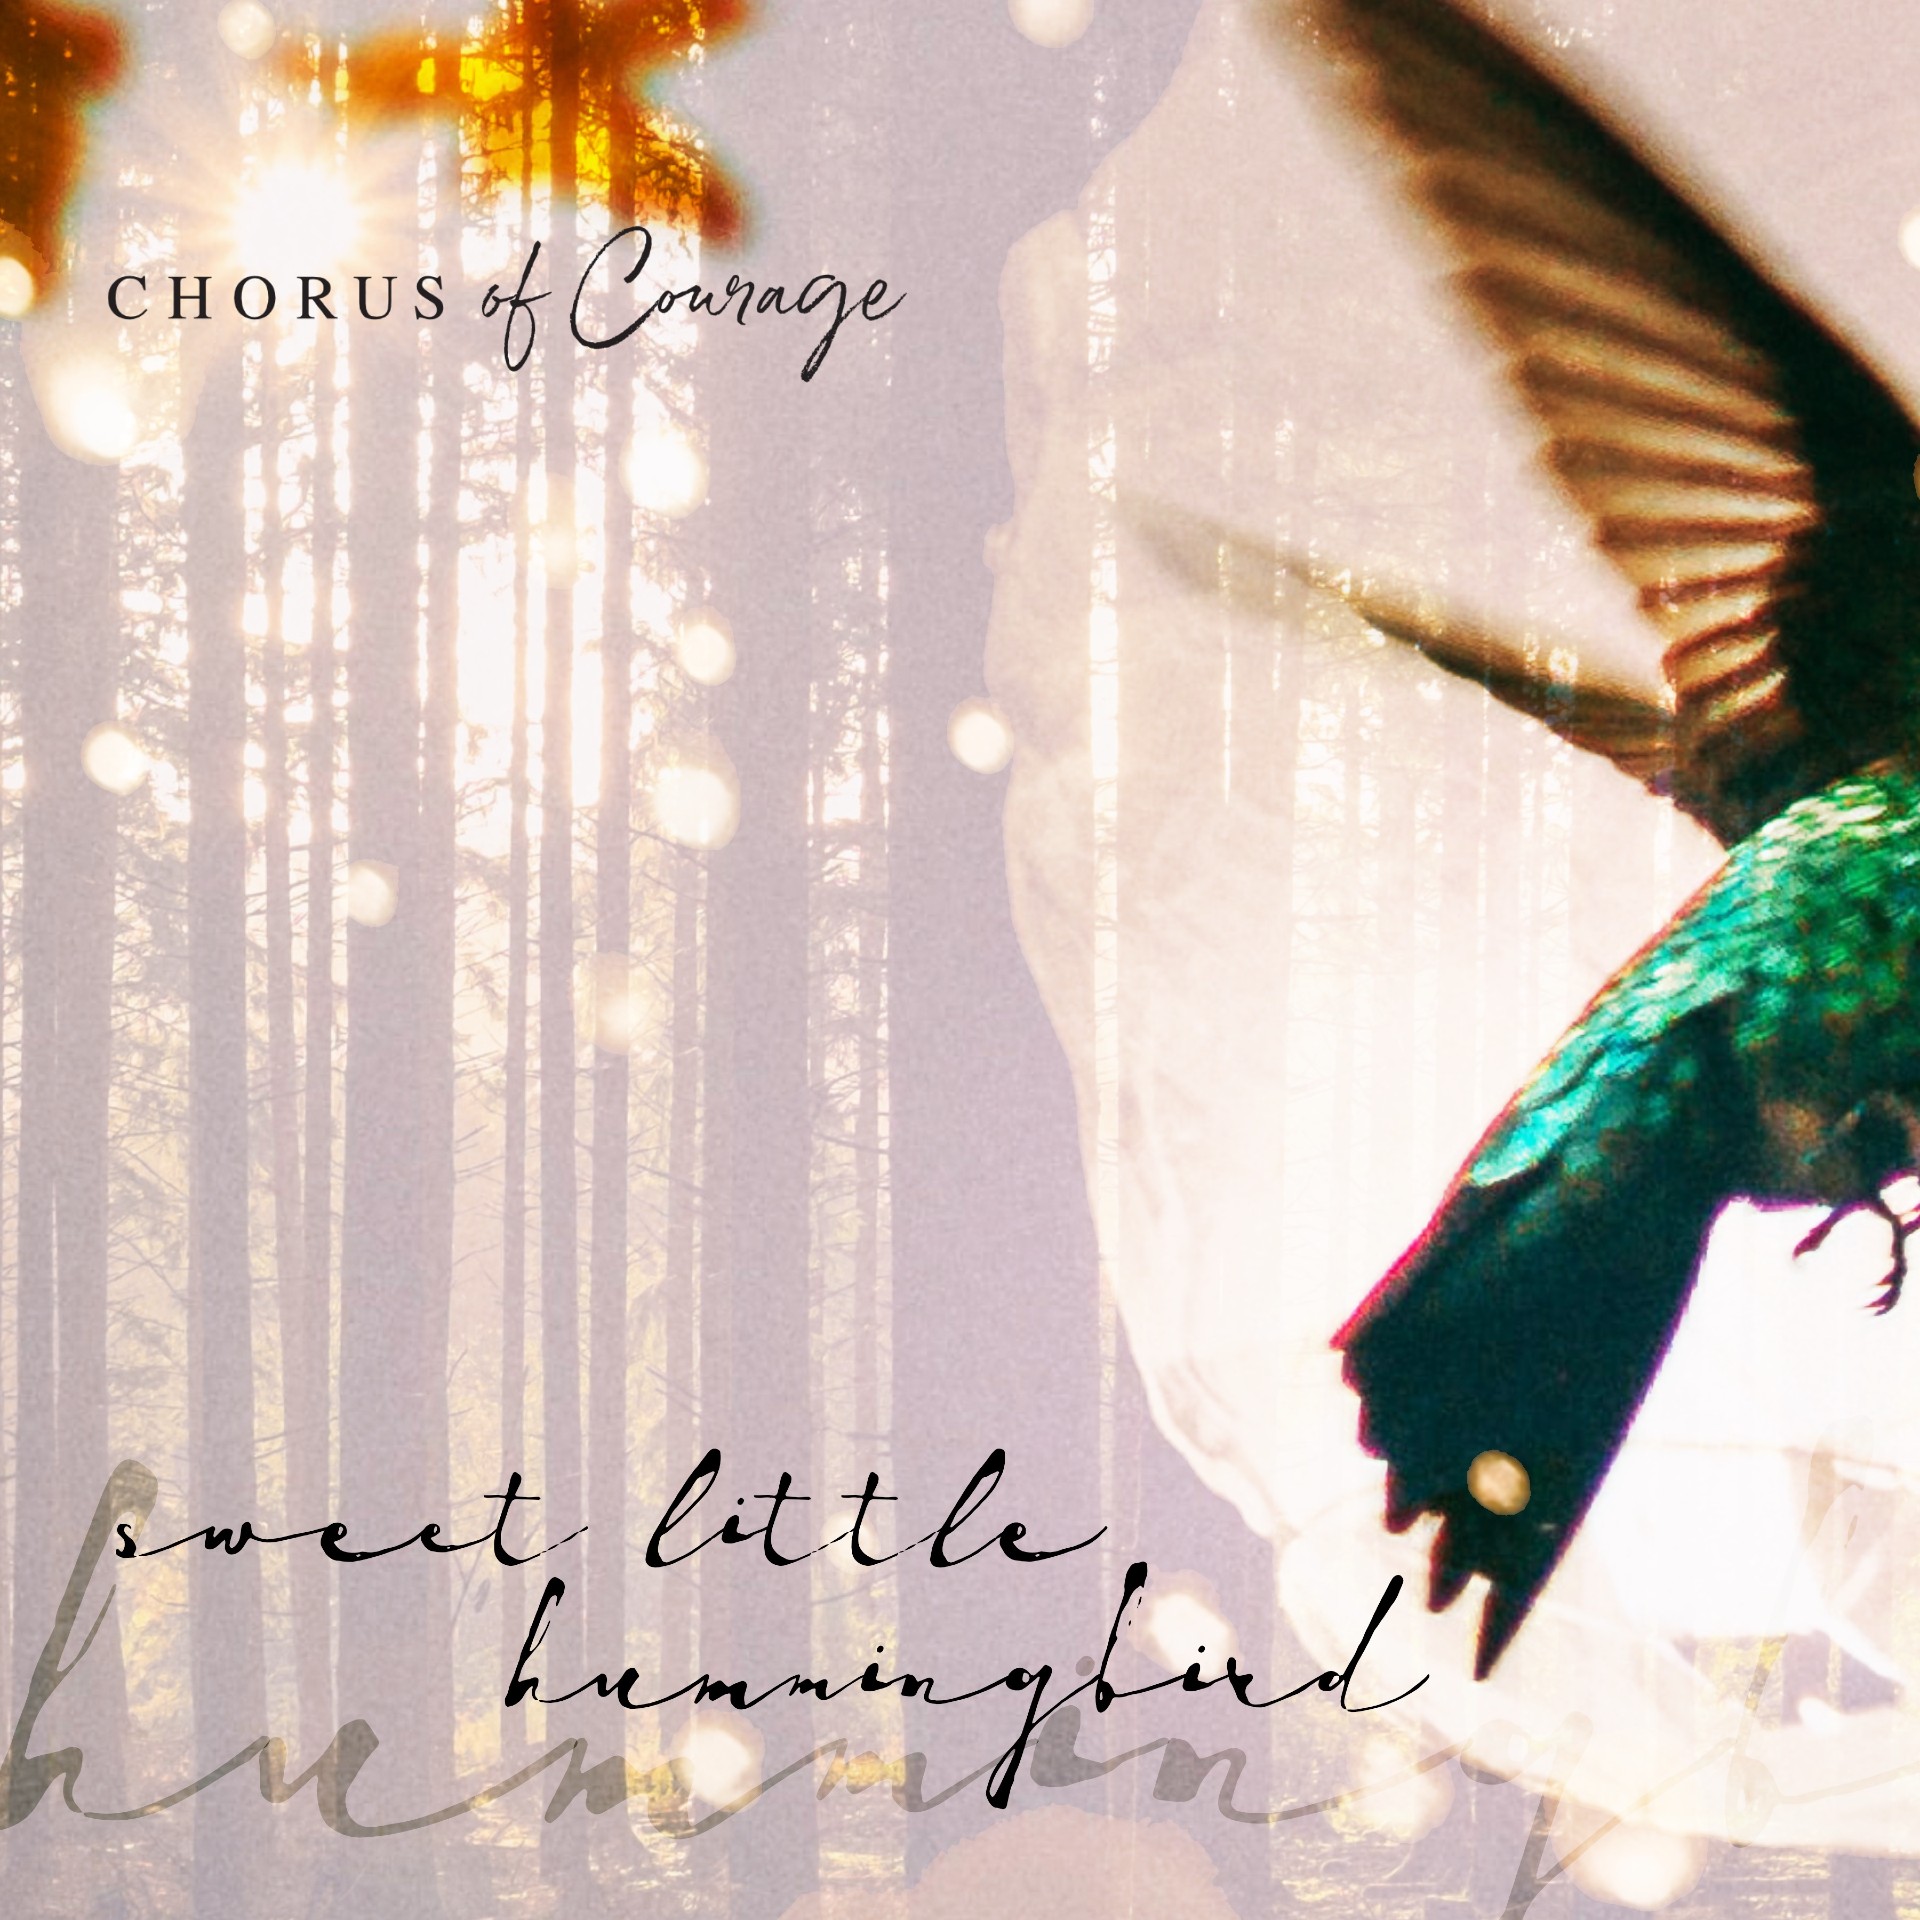 Chorus of Courage “Sweet Little Hummingbird” single artwork